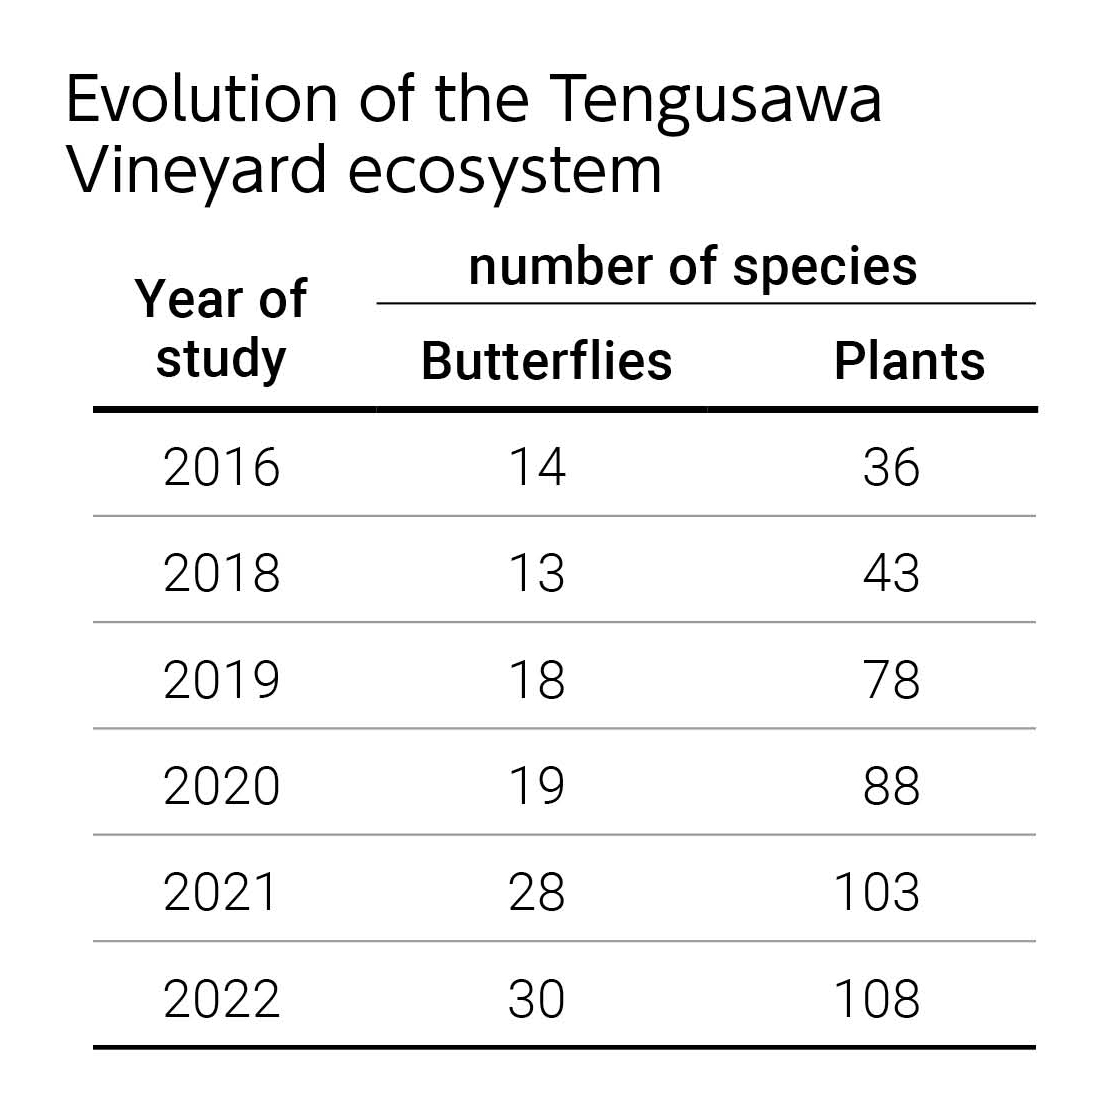 Evolution of the Tengusawa Vineyard ecosystem